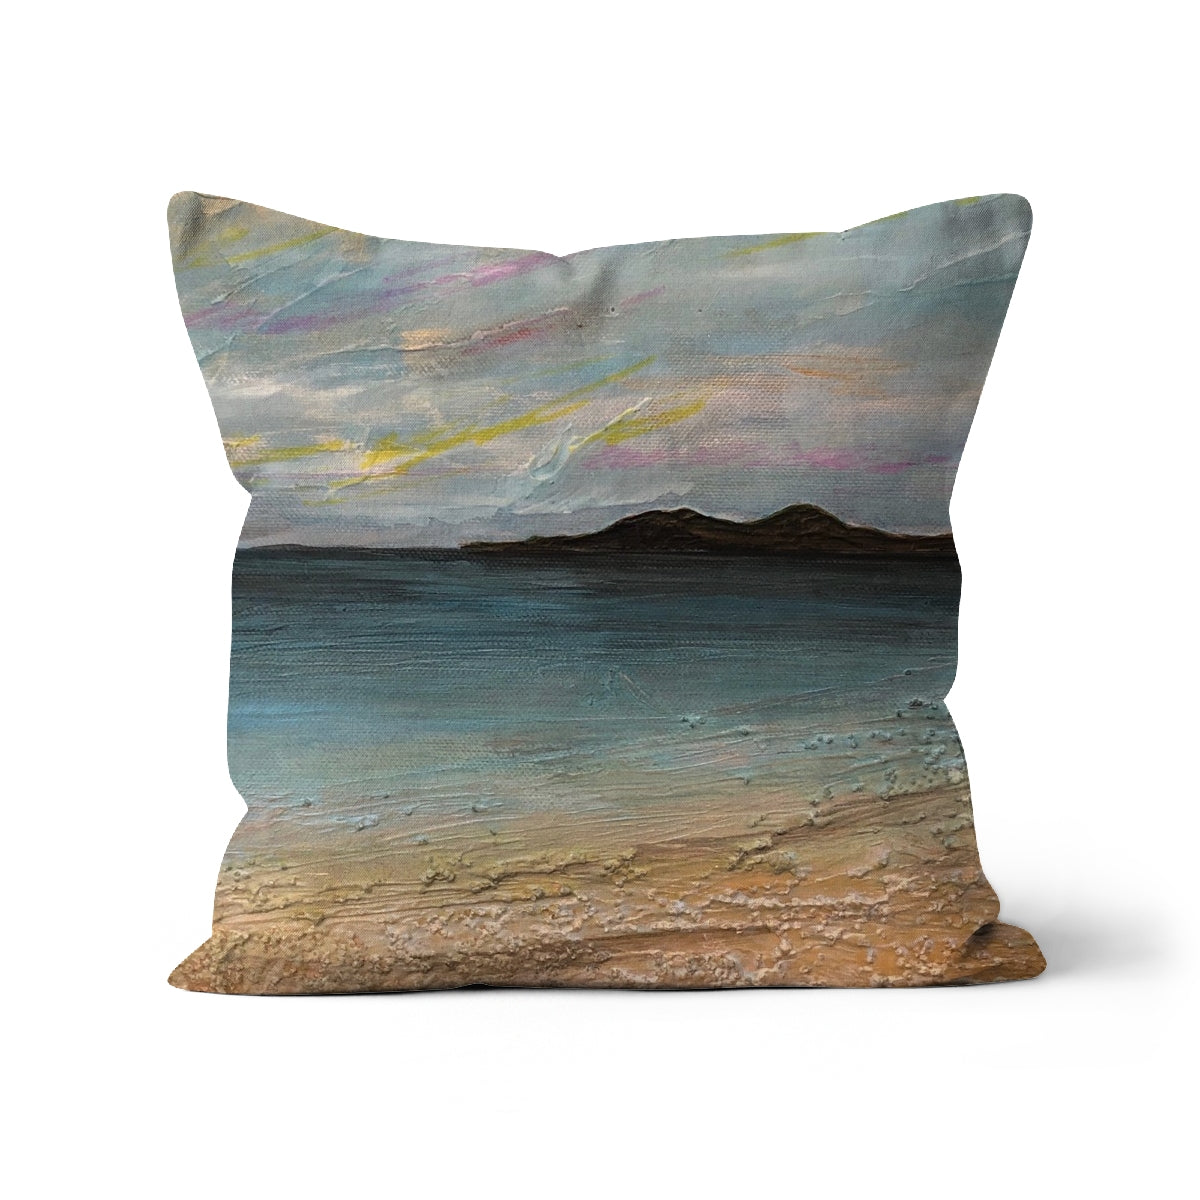 Garrynamonie Beach South Uist Art Gifts Cushion-Cushions-Hebridean Islands Art Gallery-Canvas-12"x12"-Paintings, Prints, Homeware, Art Gifts From Scotland By Scottish Artist Kevin Hunter